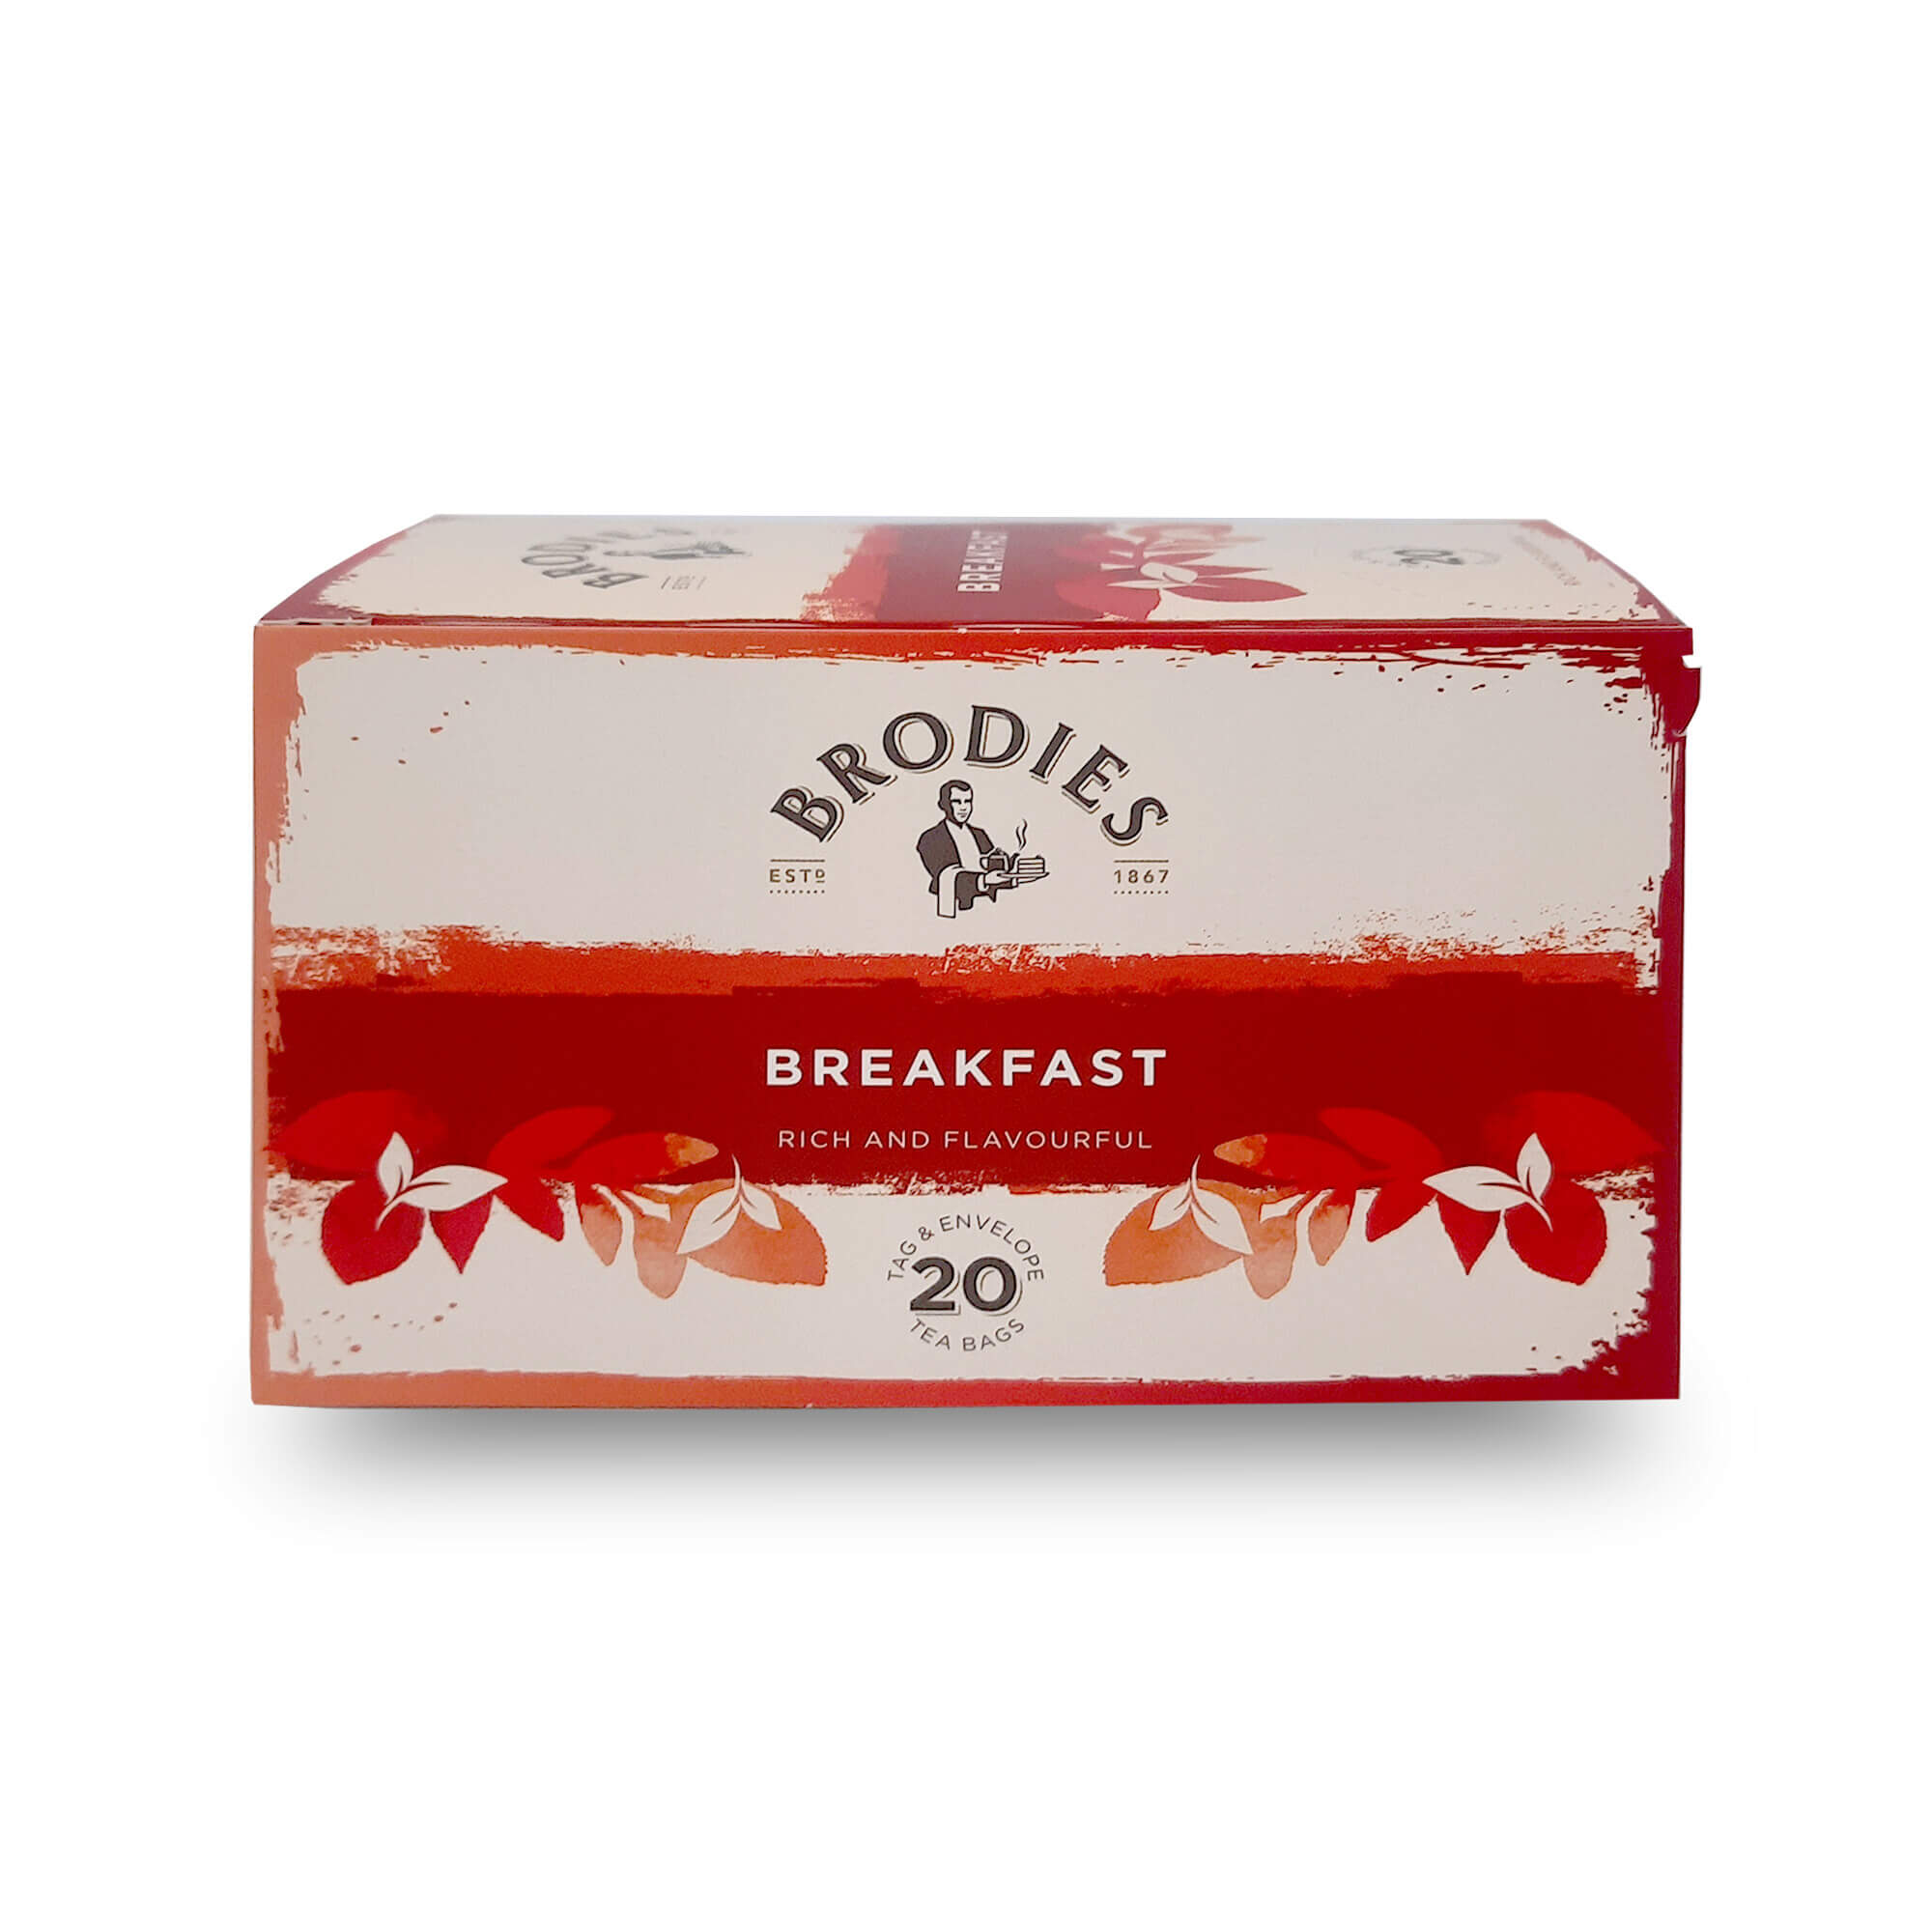 Brodies Breakfast Tea 2g X 20's